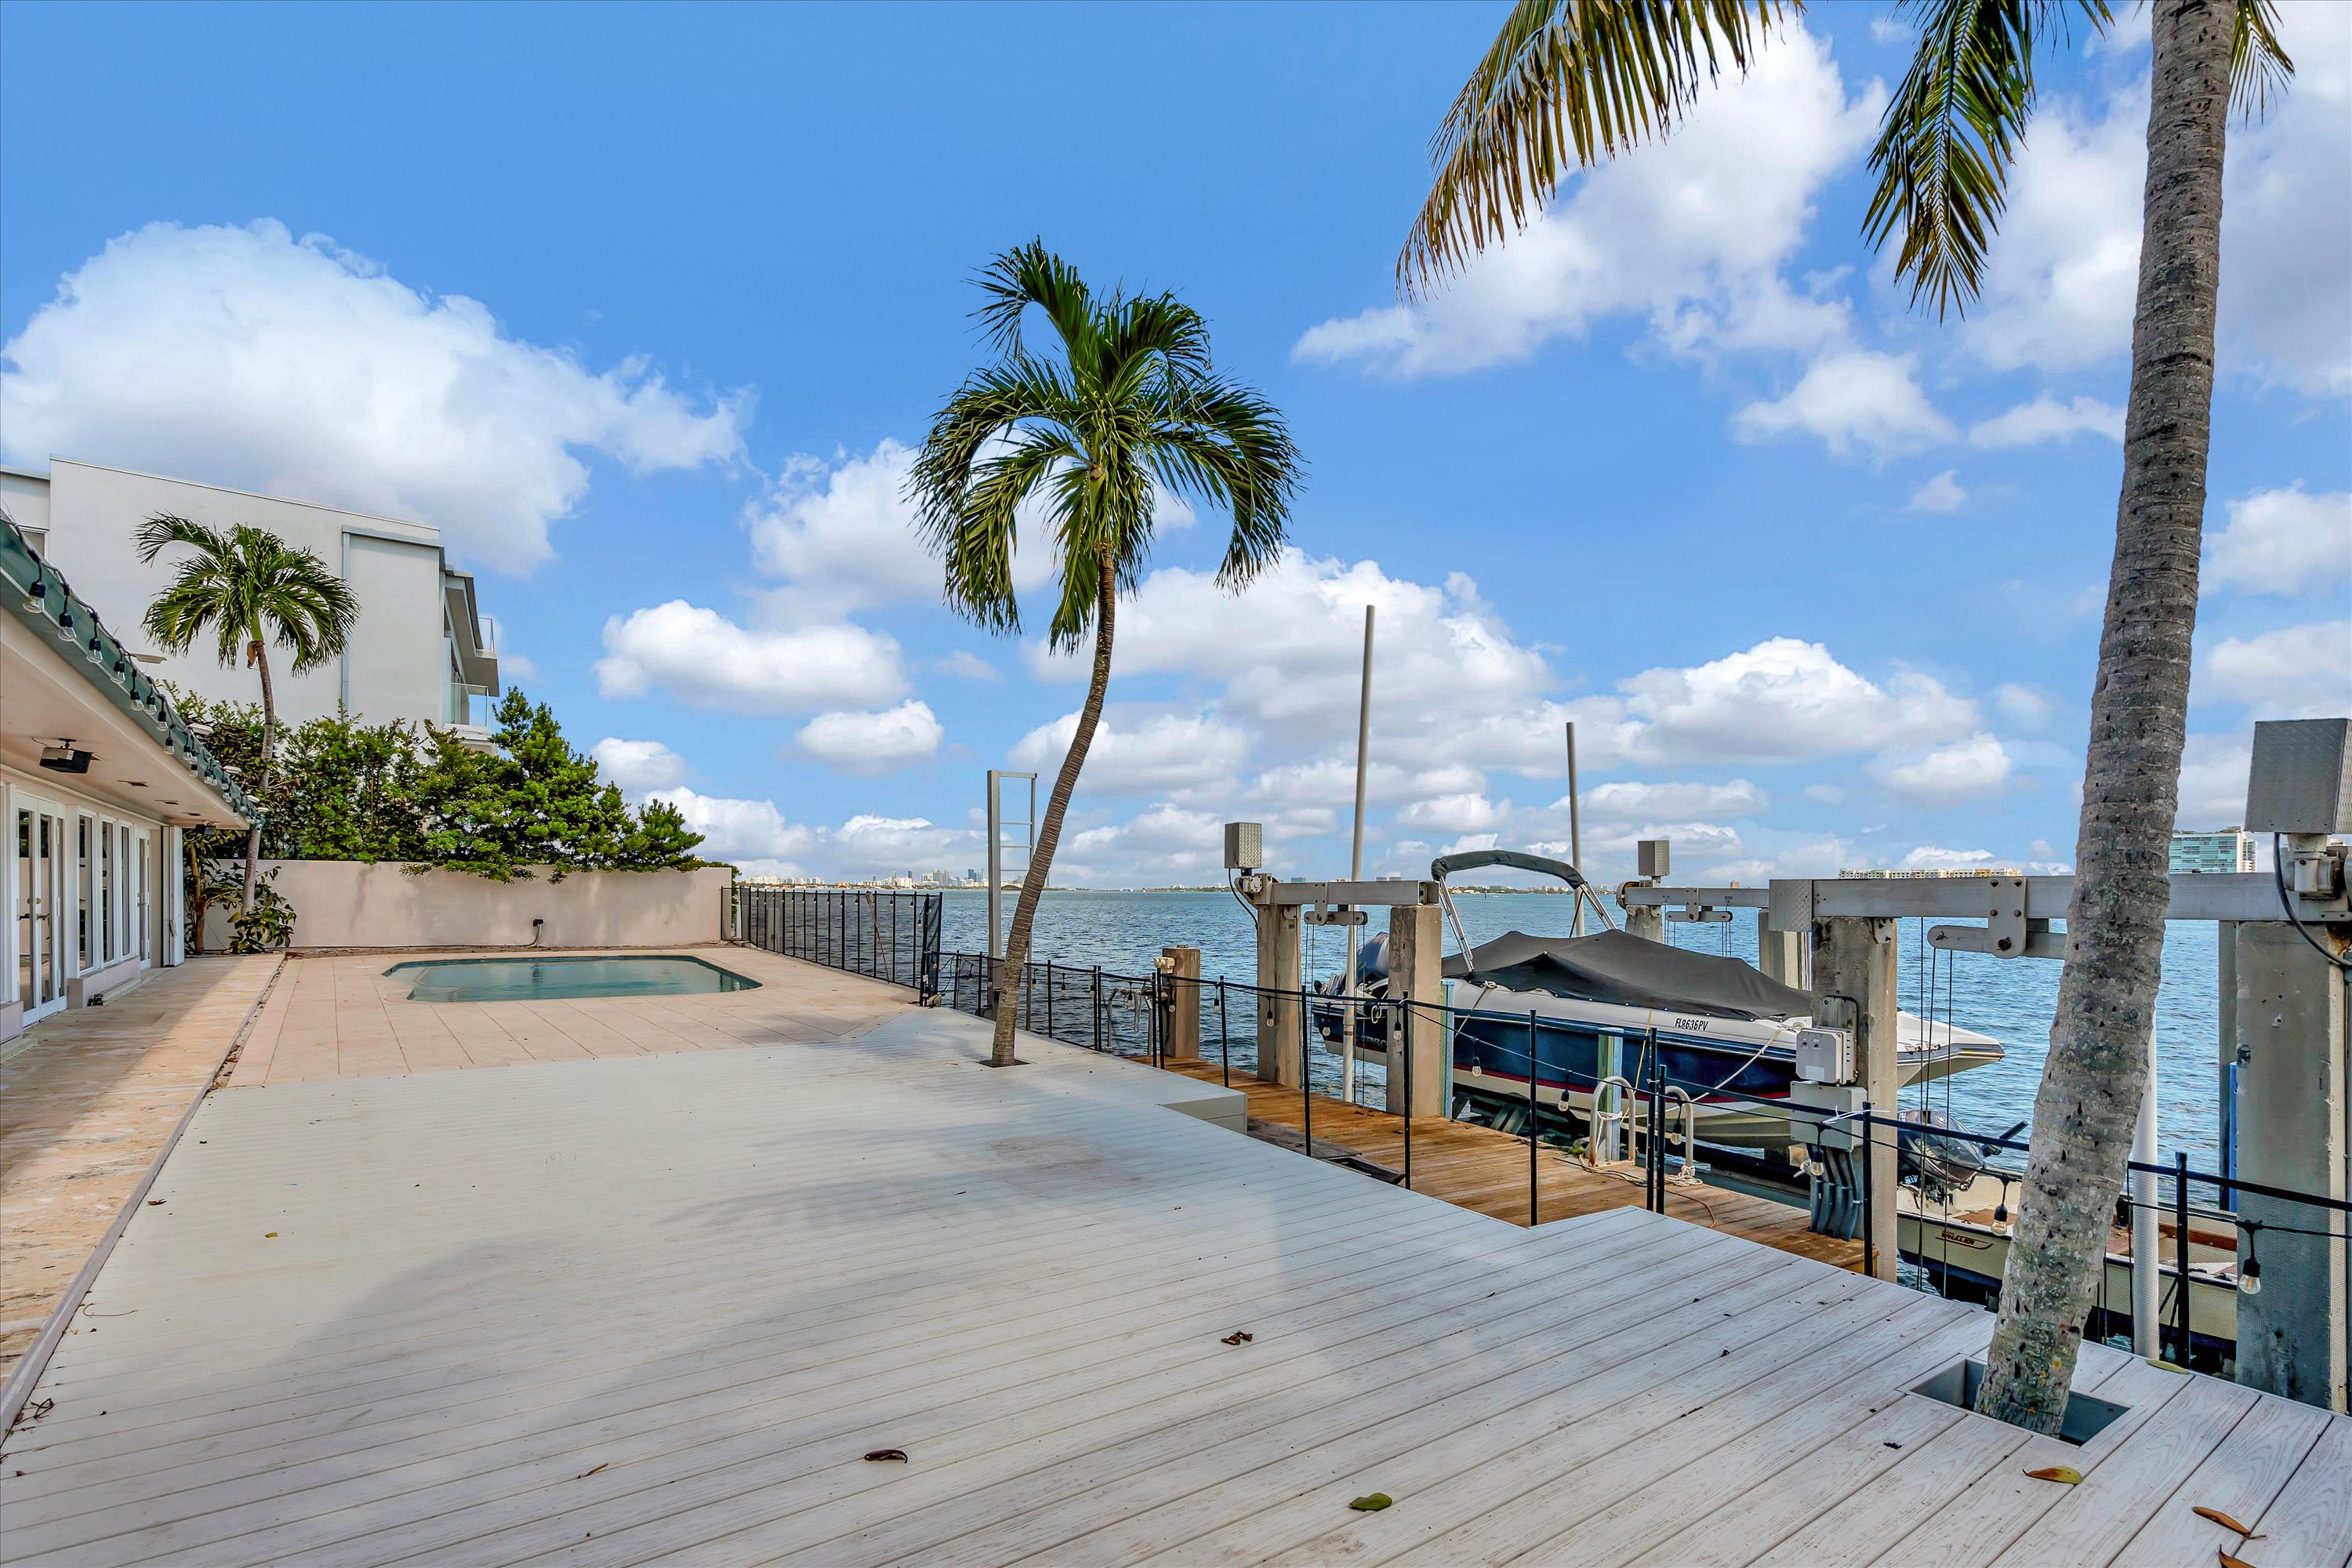 Beautiful Shorecrest, Miami, FL house showcasing the best property management services